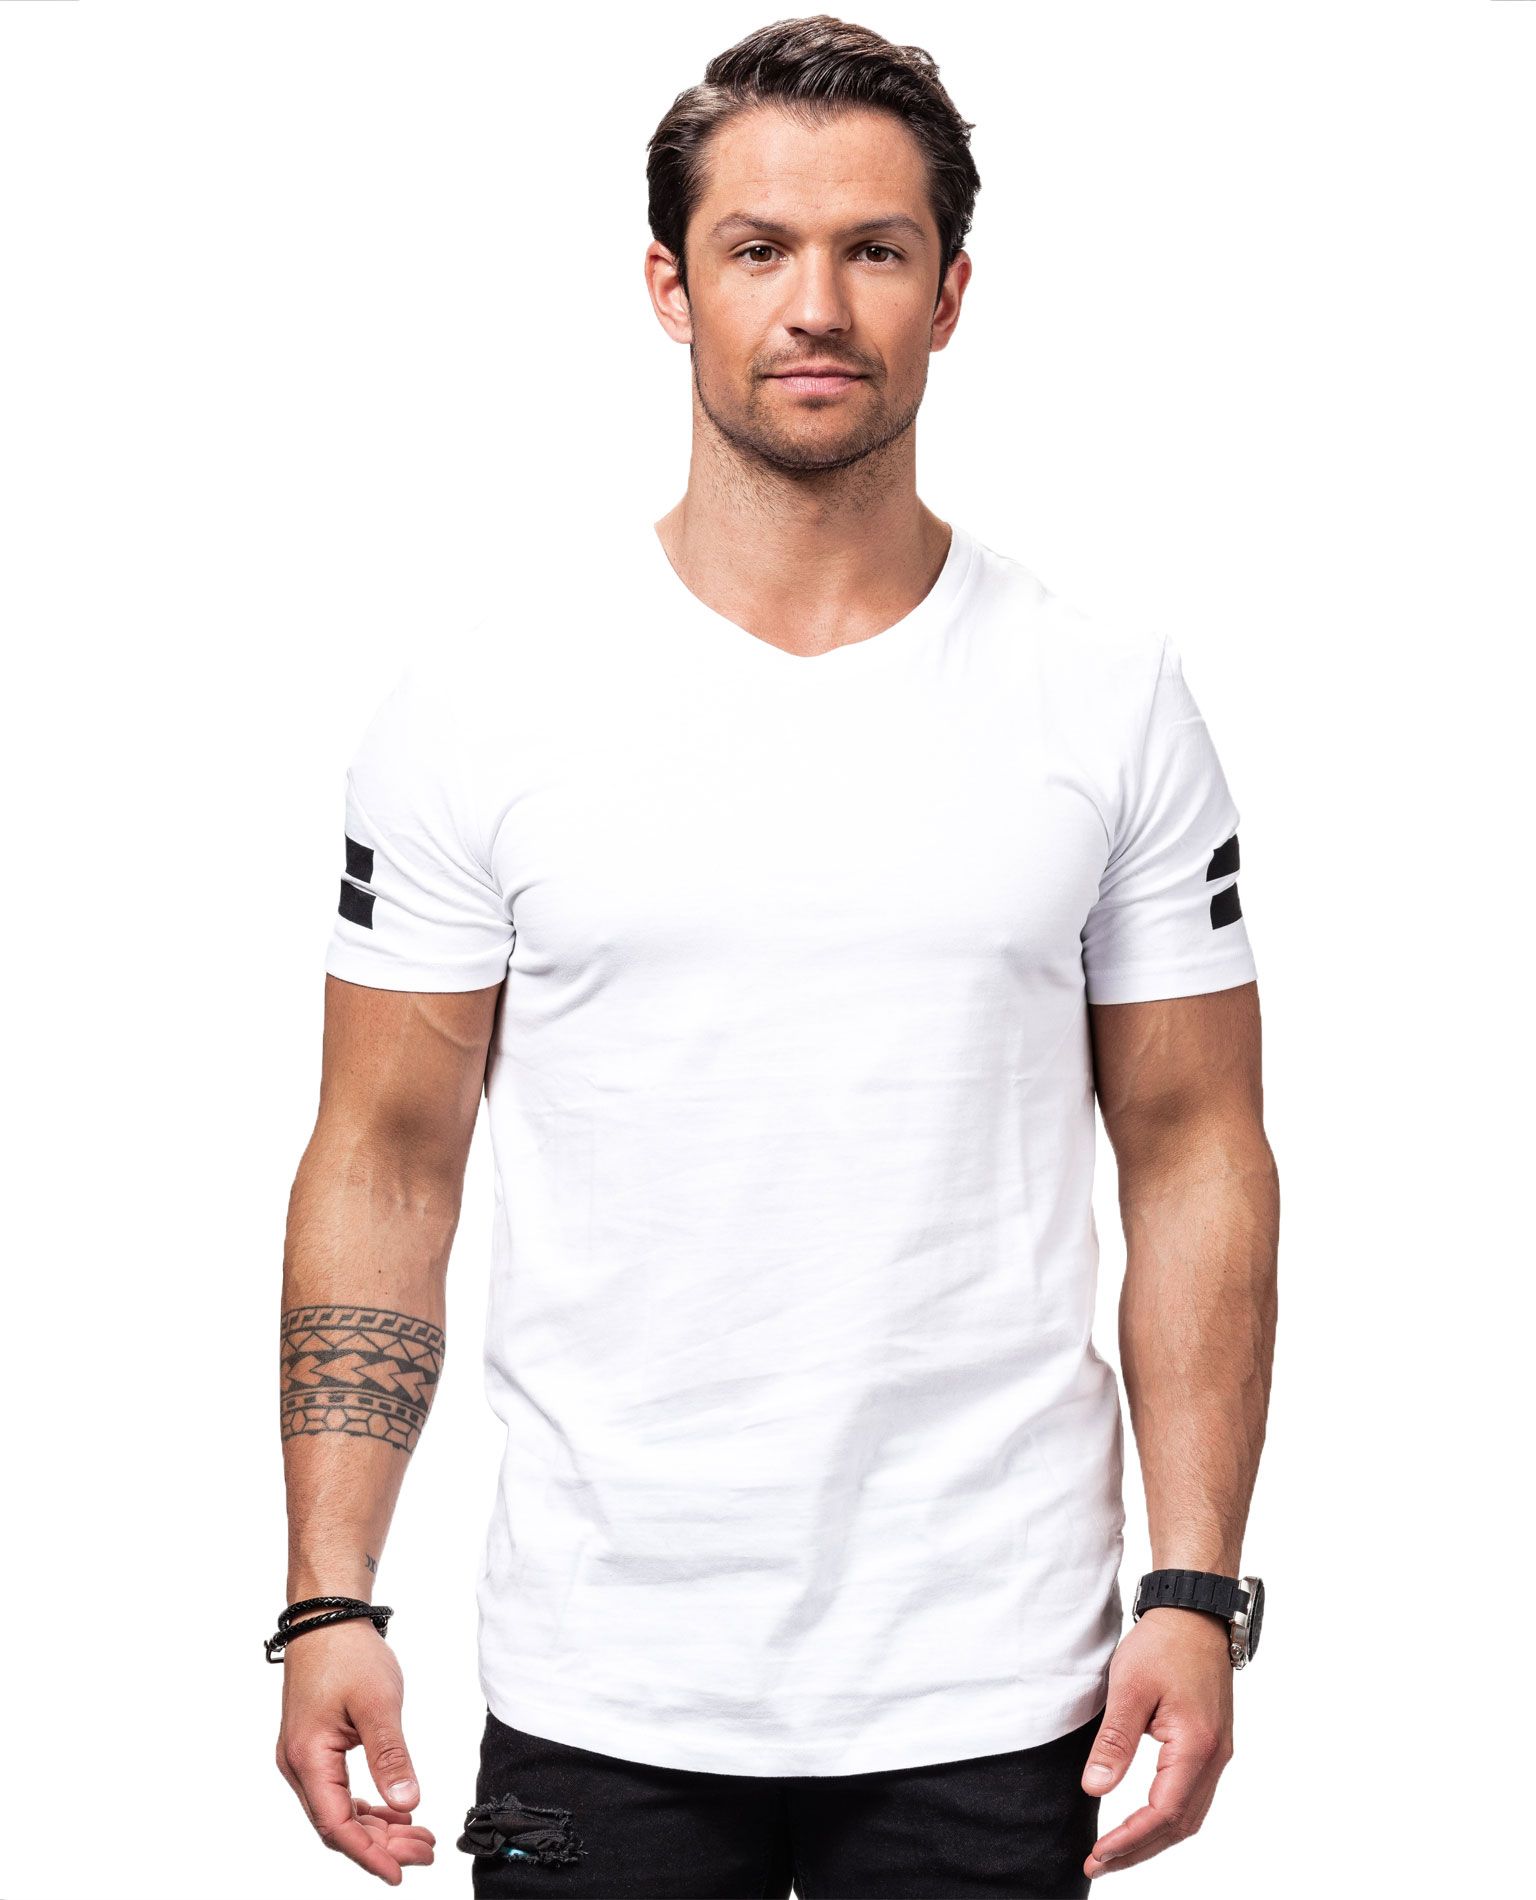 Boro White Jack & Jones - 6021 - Casual-T-Shirts - Jerone.com